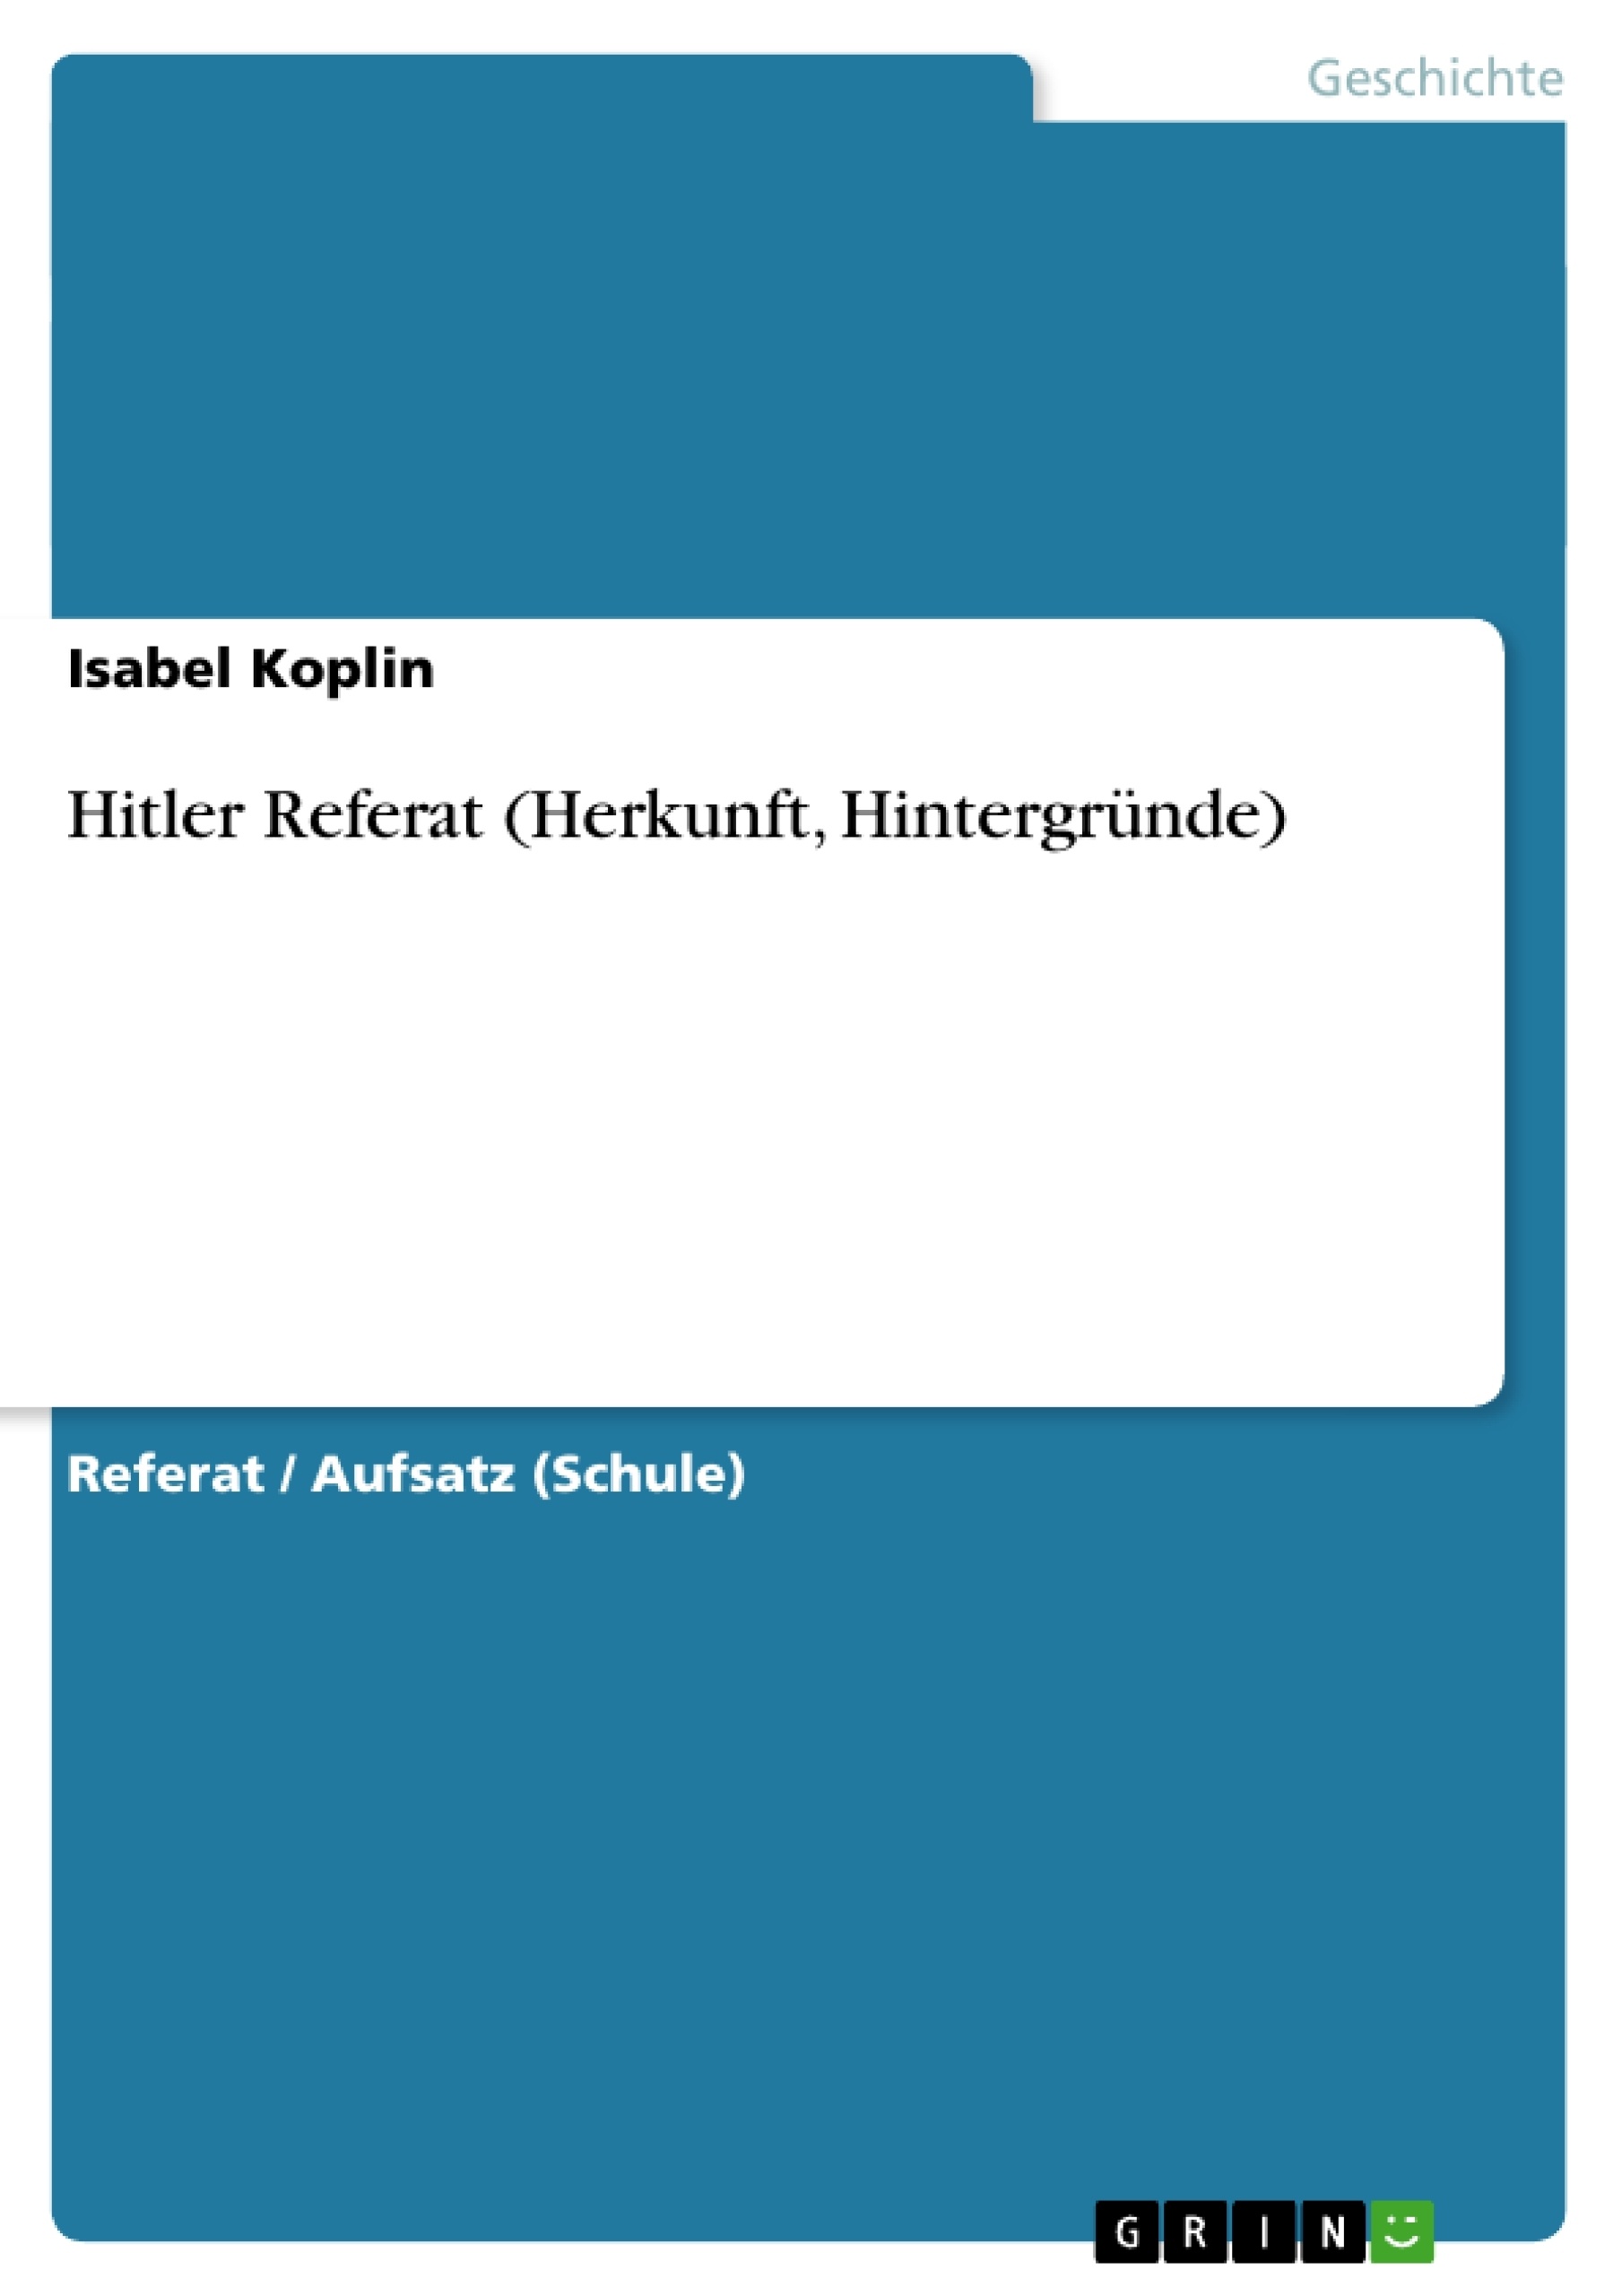 Реферат: Hitler